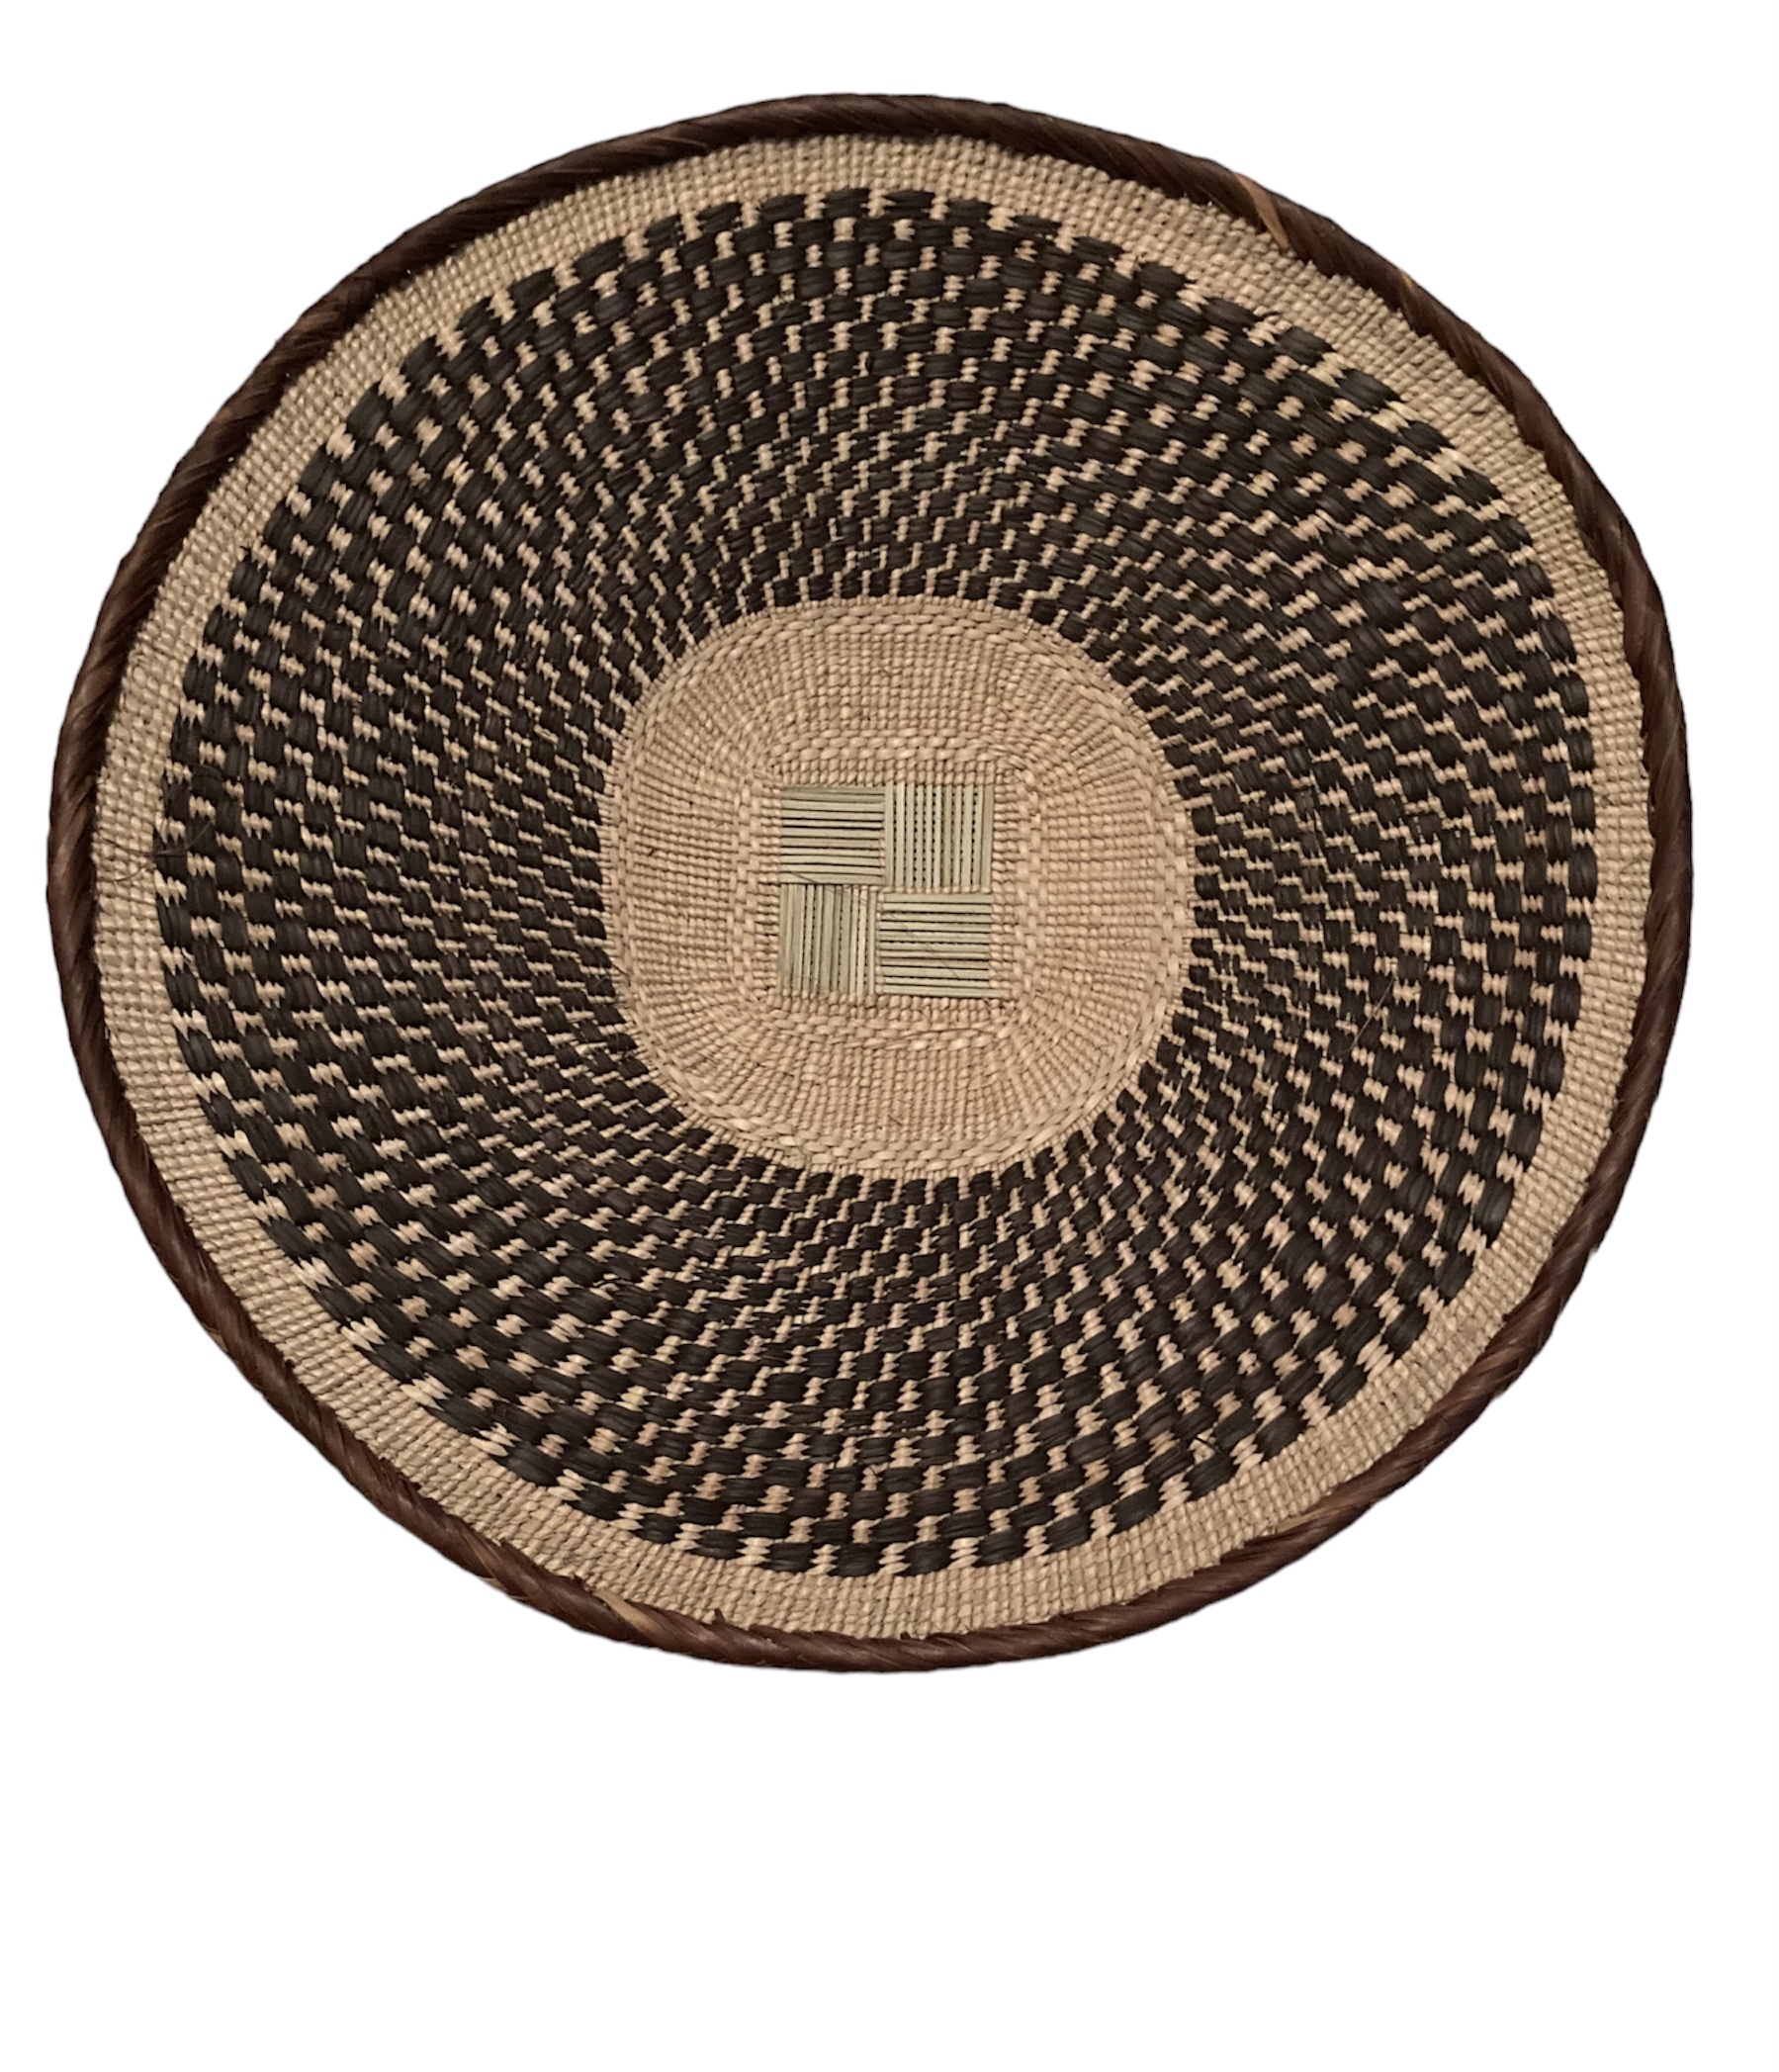 Tonga Basket from Zimbabwe - Design #016 - 17\" dia.